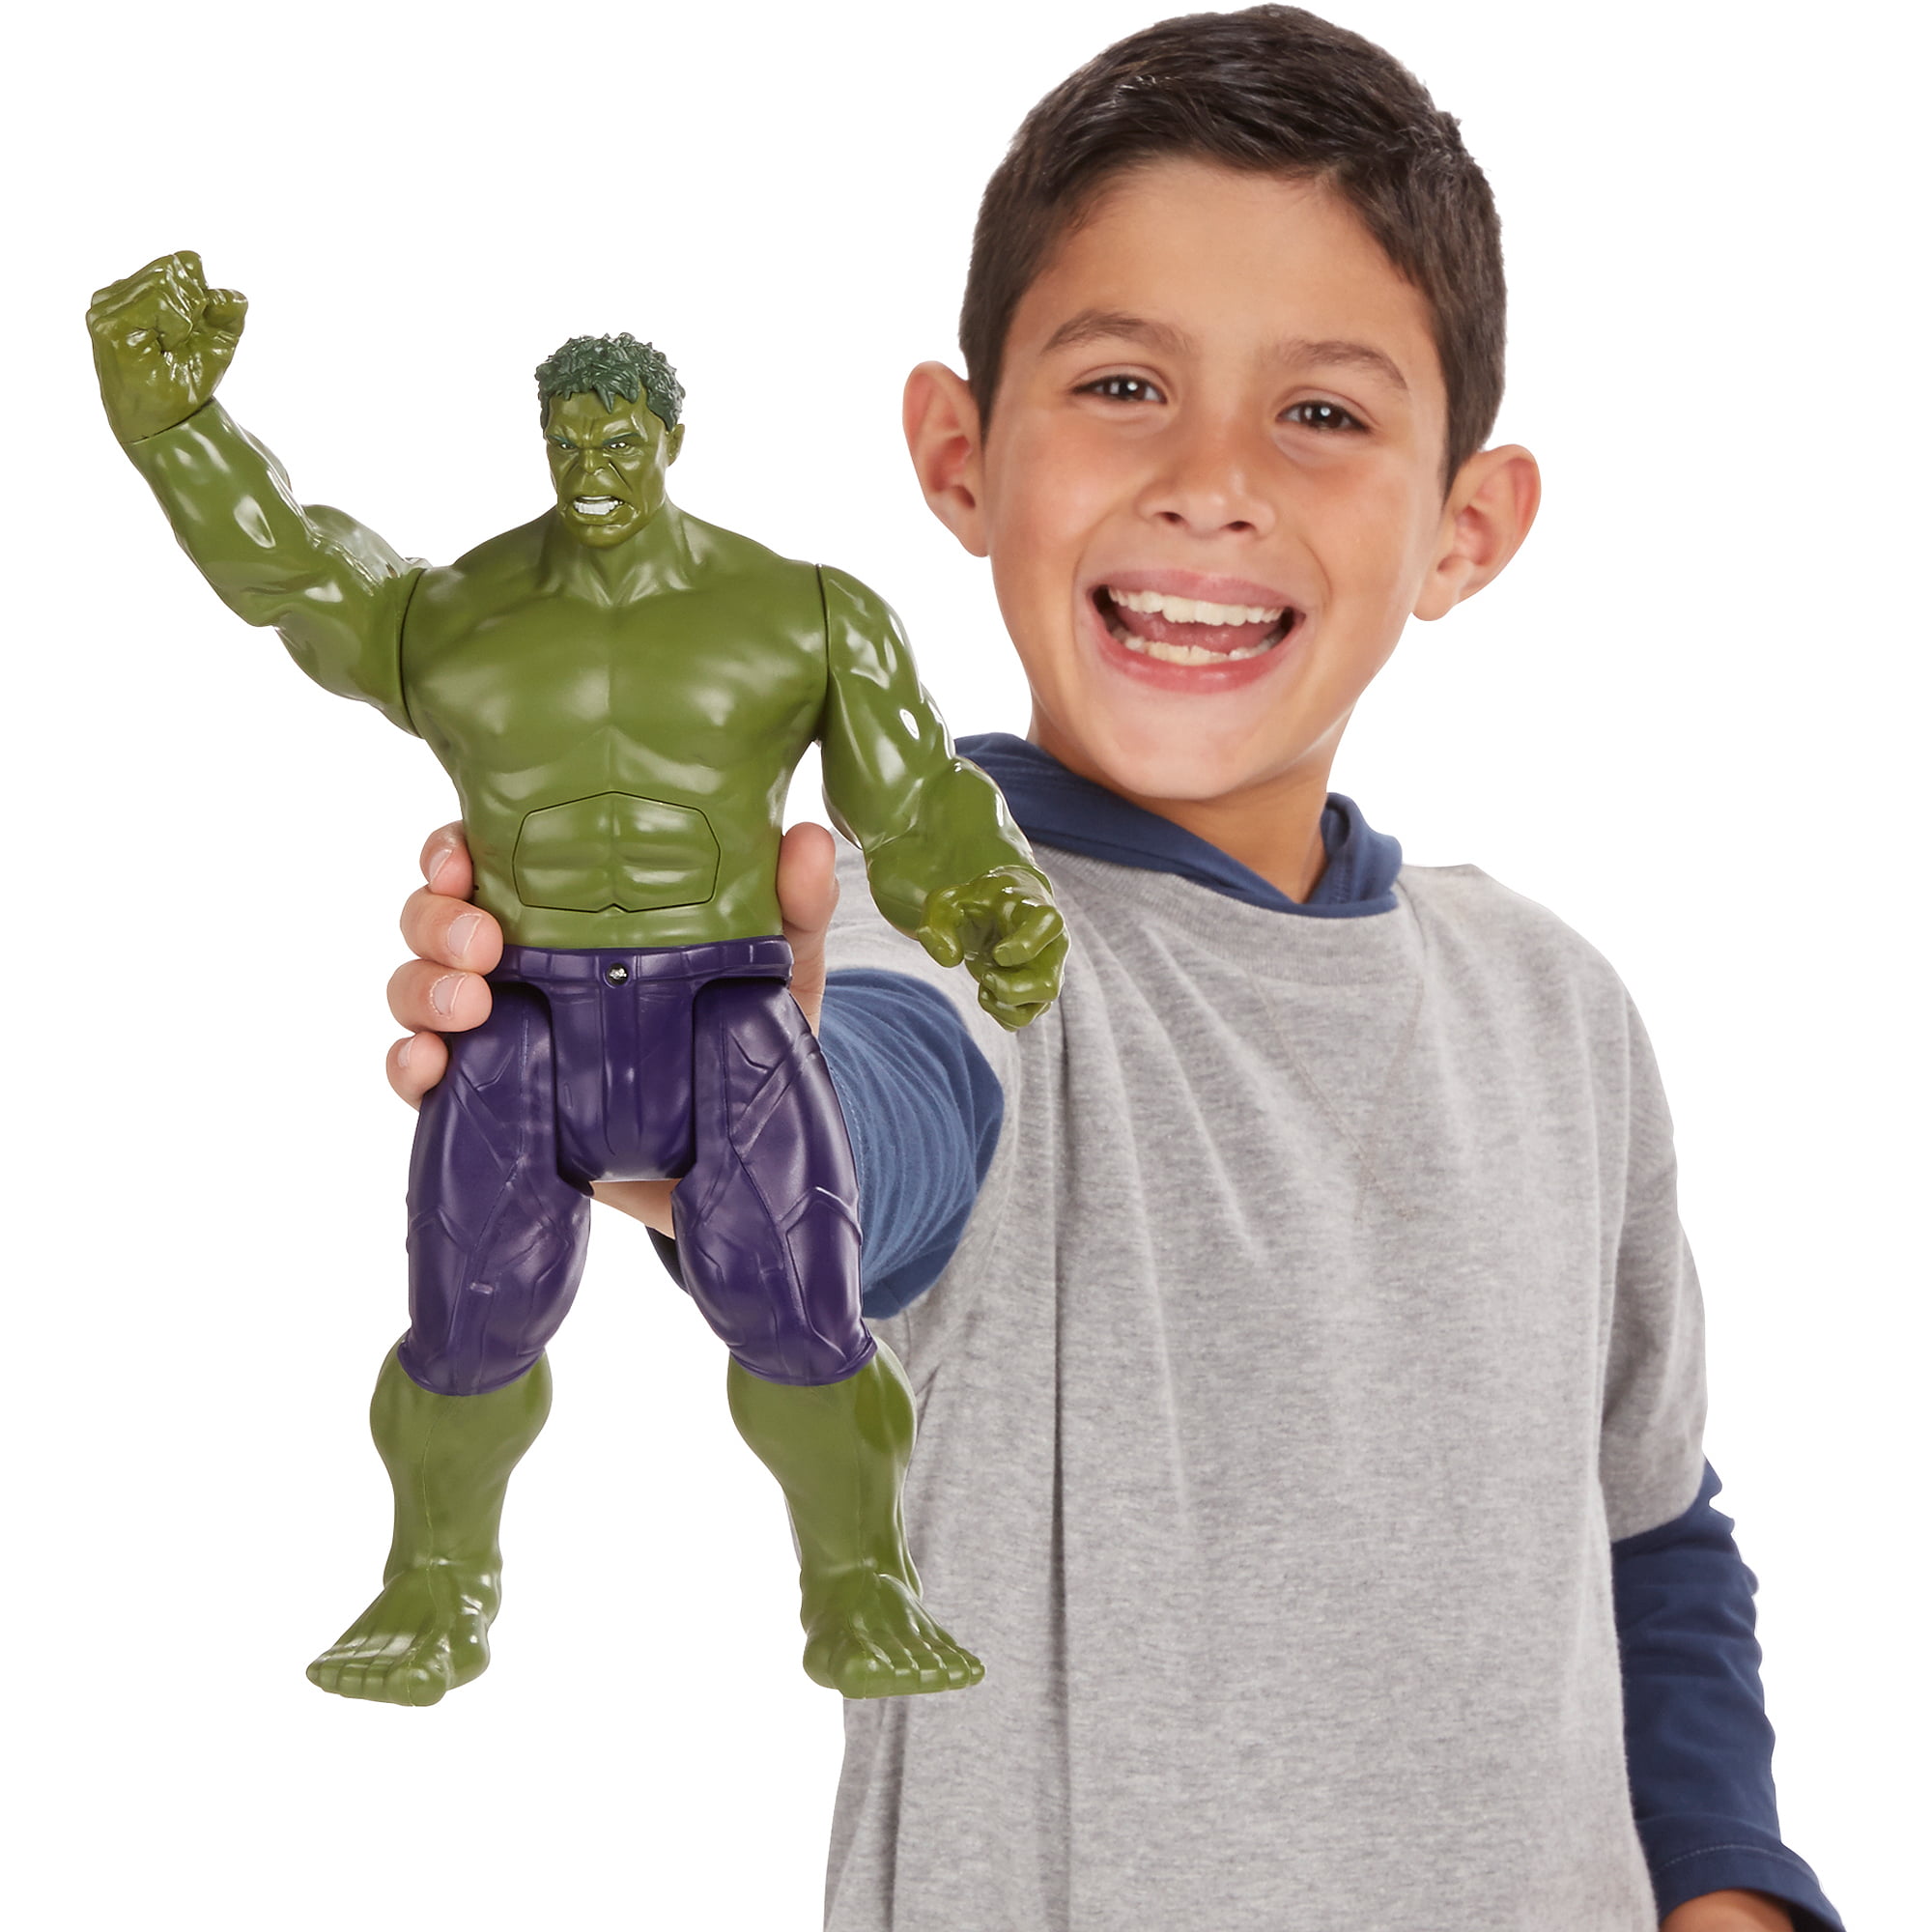 Avengers Titan Hero Series Hulk 12 Inch Action Figure